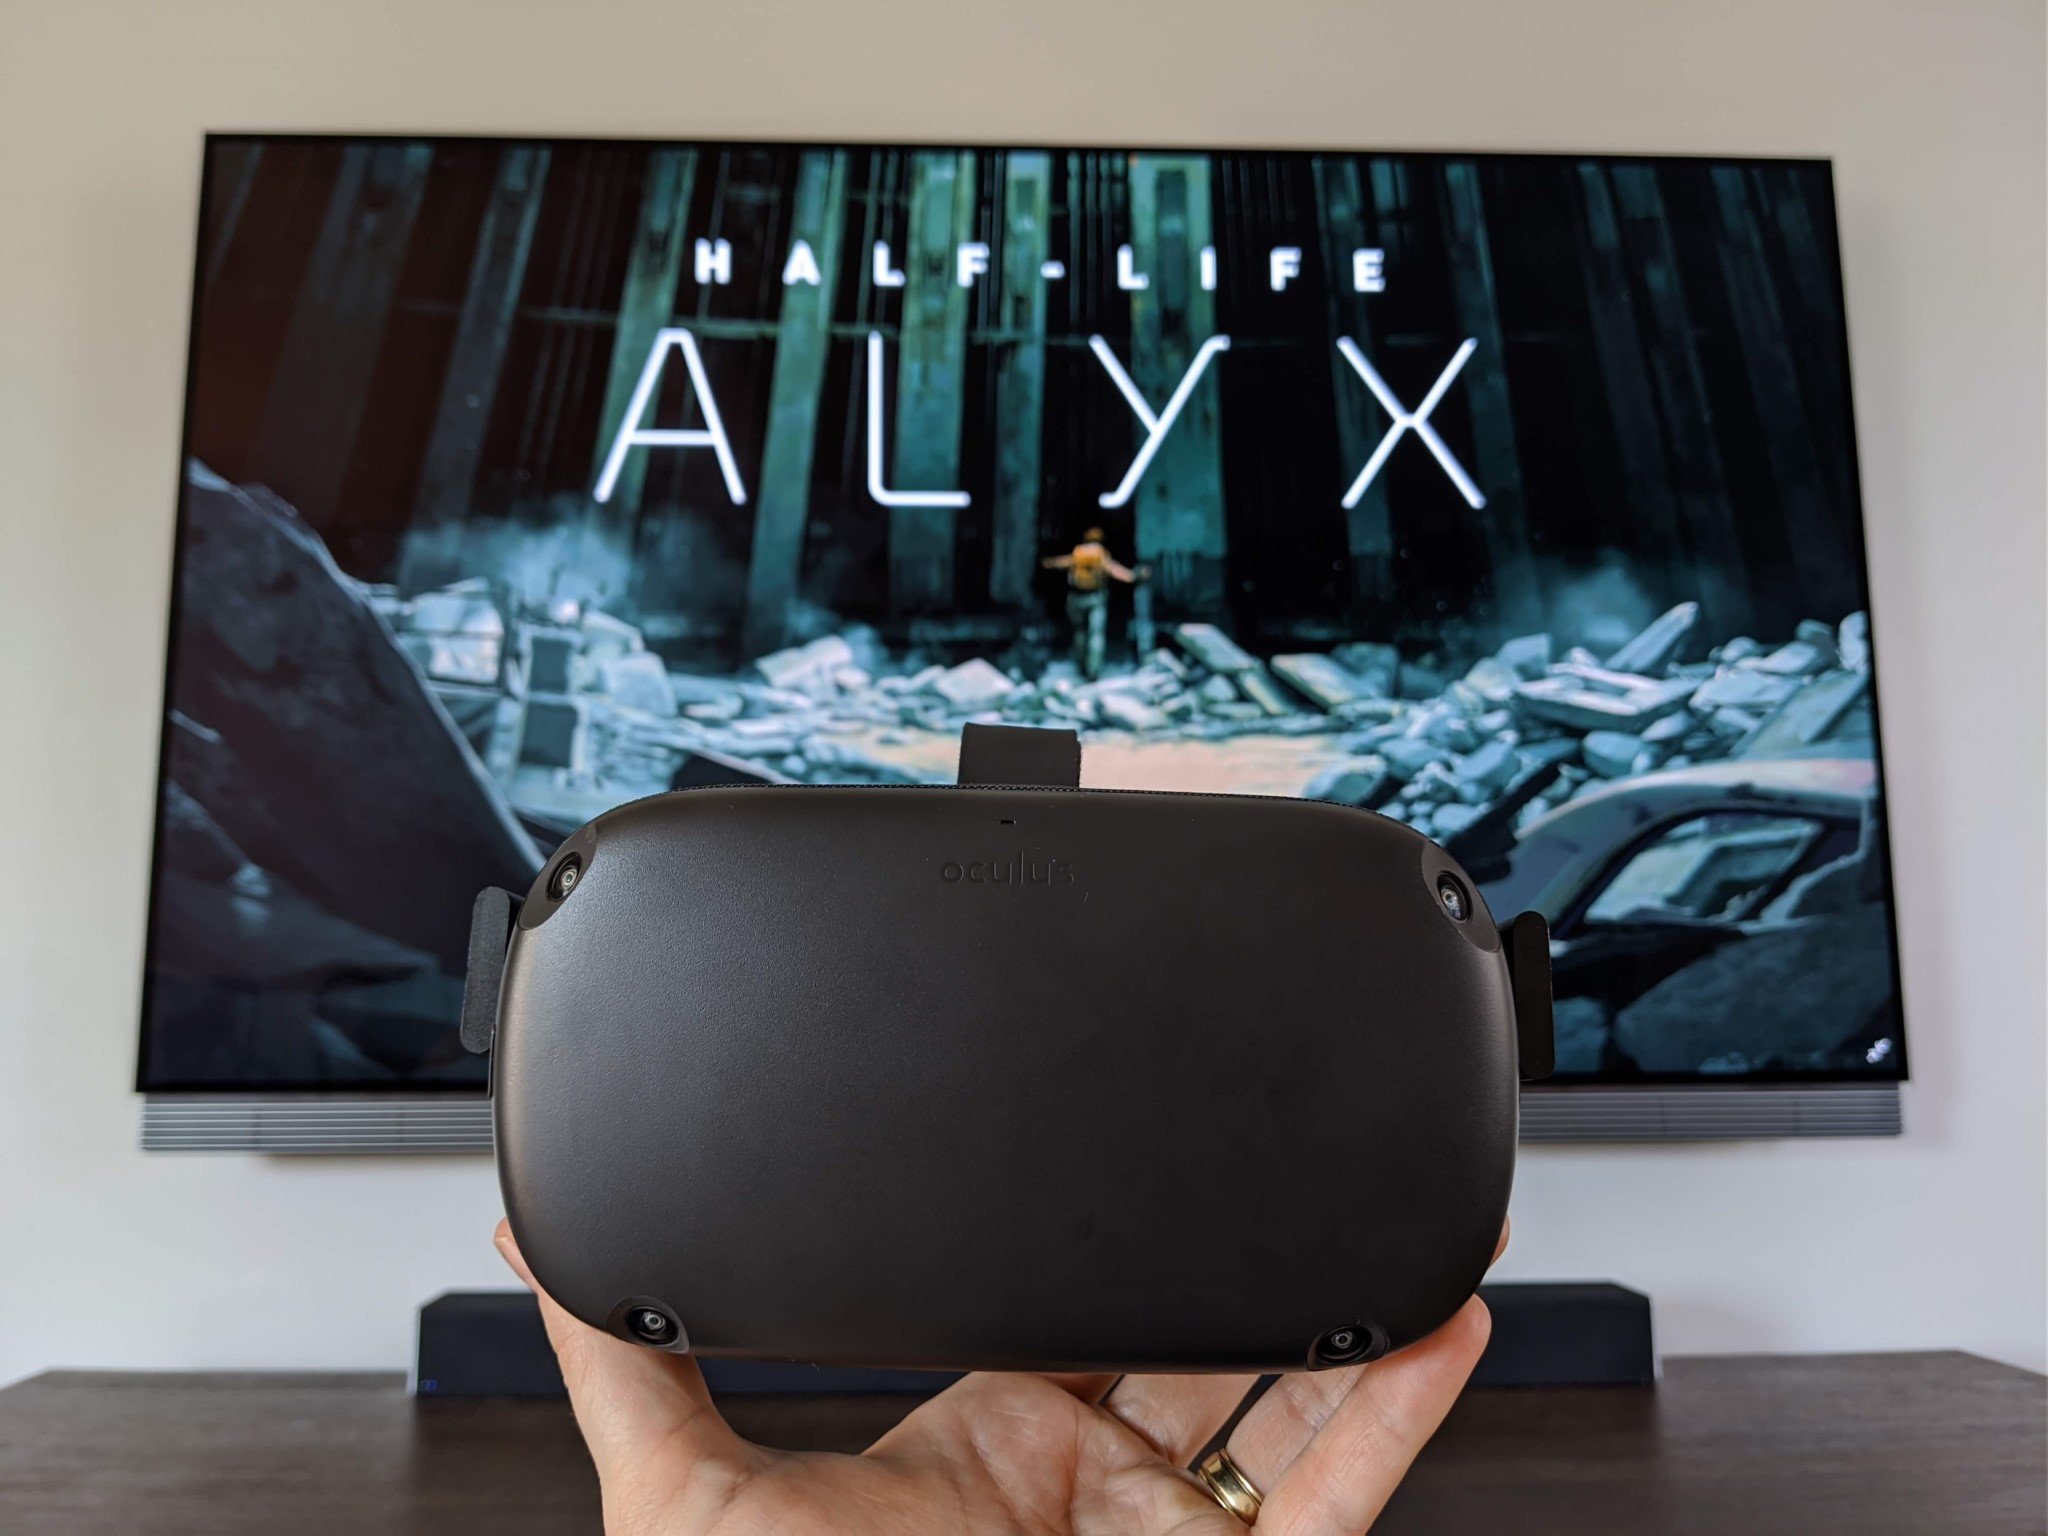 Half Life Alyx Air LinkHalf Life Alyx Oculus Quest 2 wireless vs